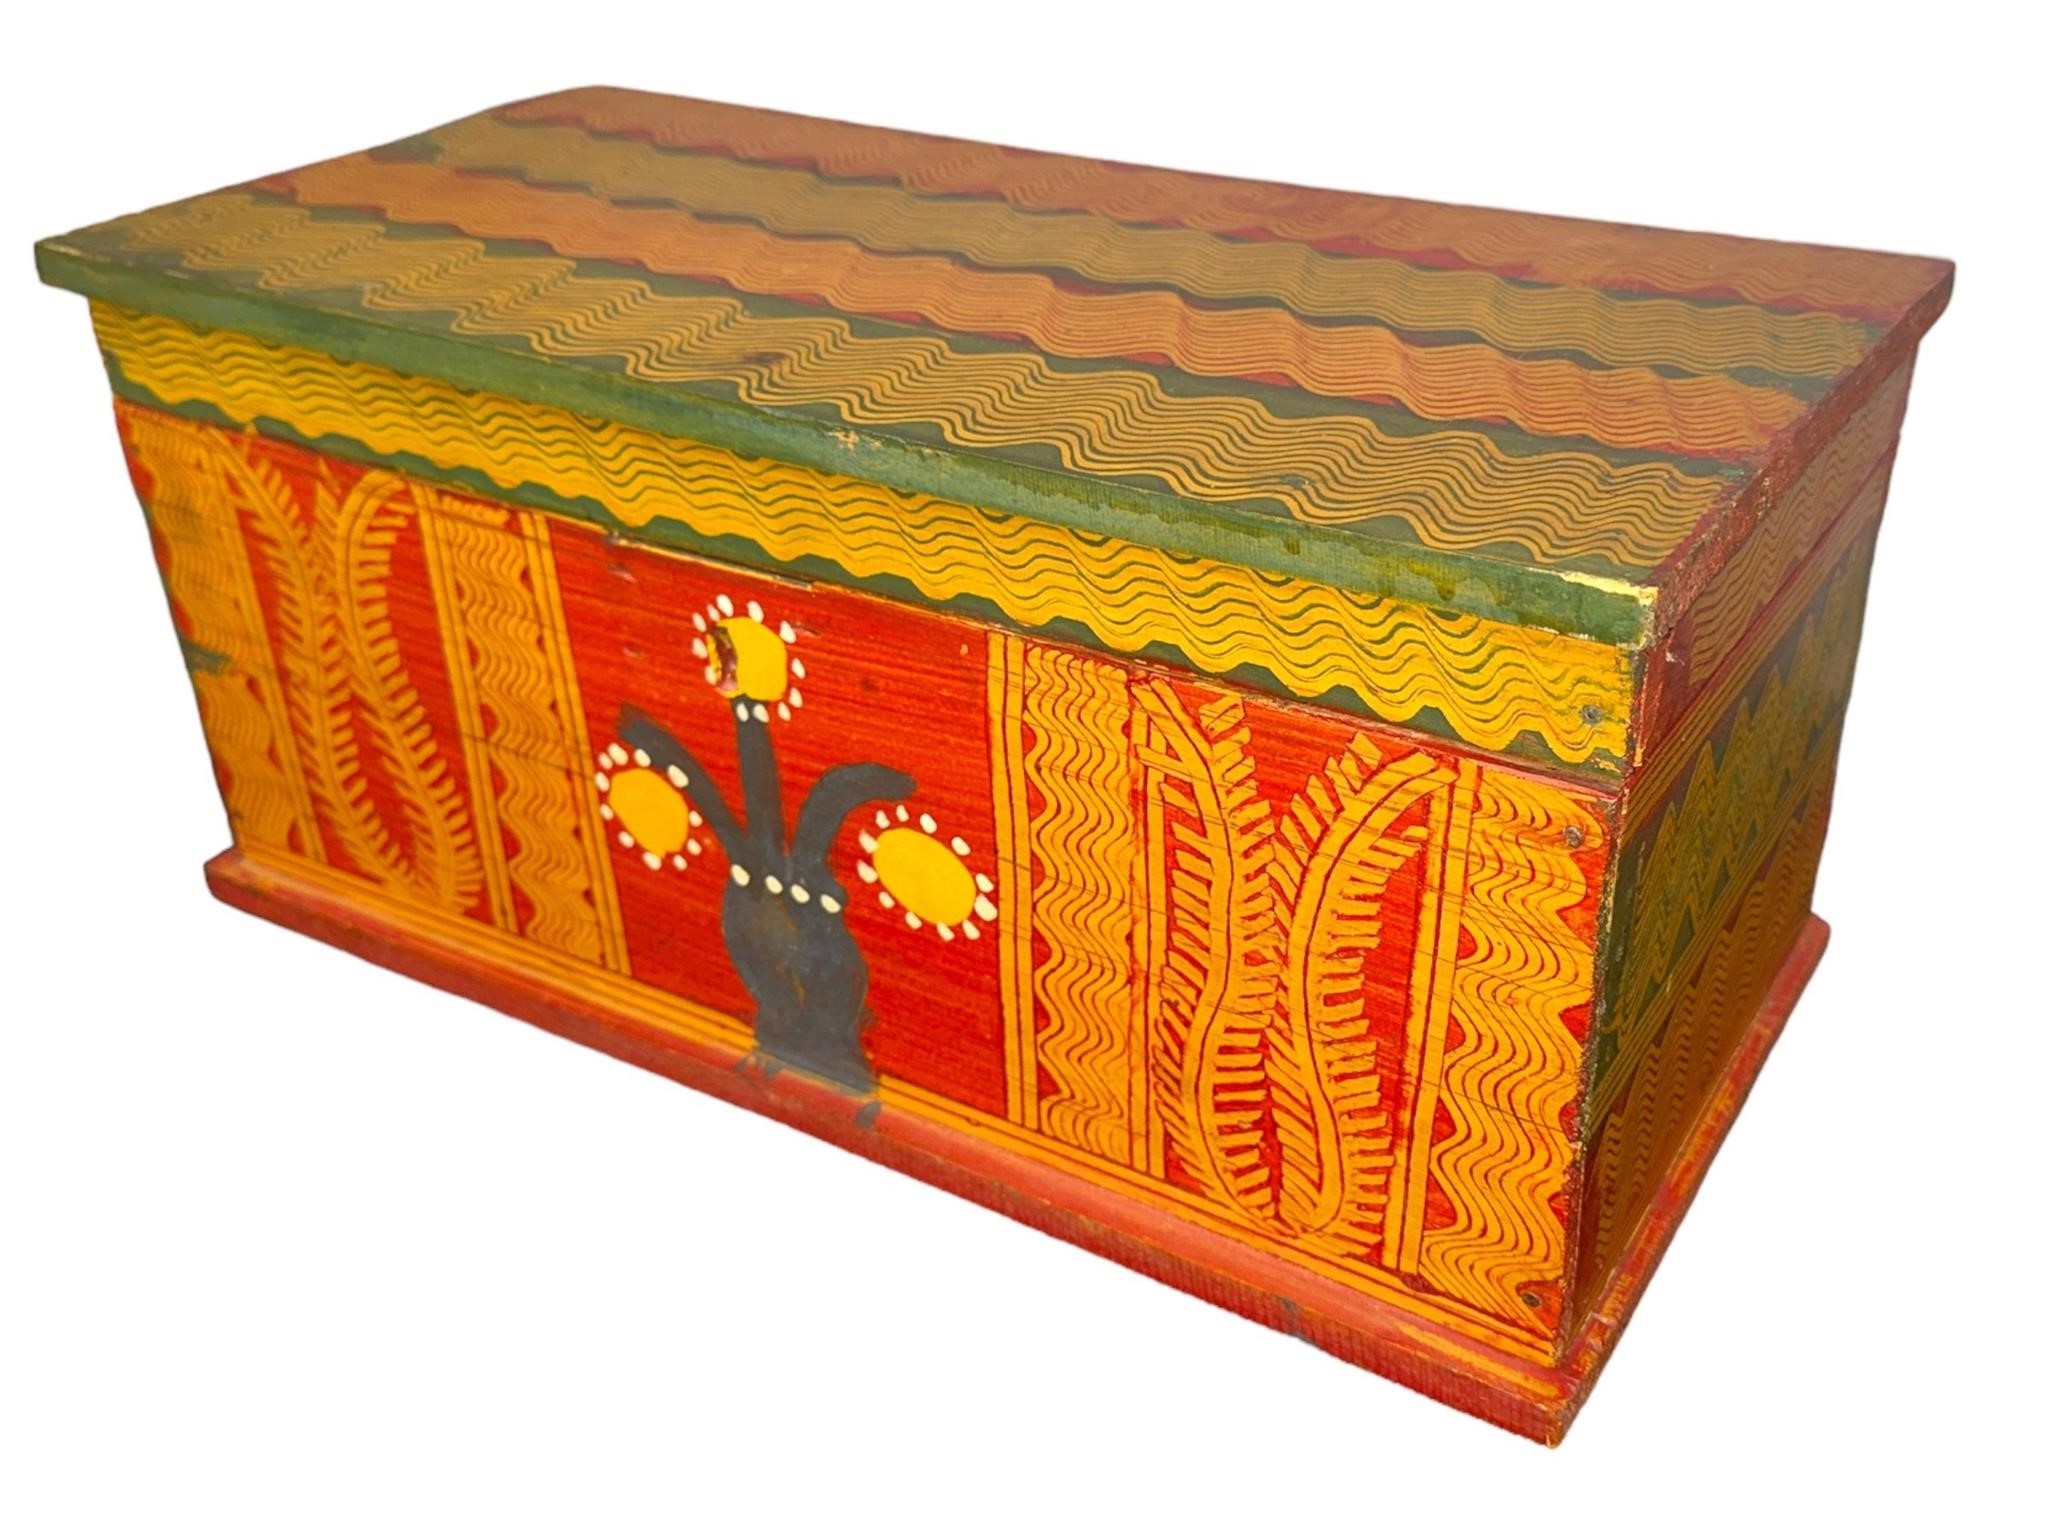 Painted Pine Folk Art Box